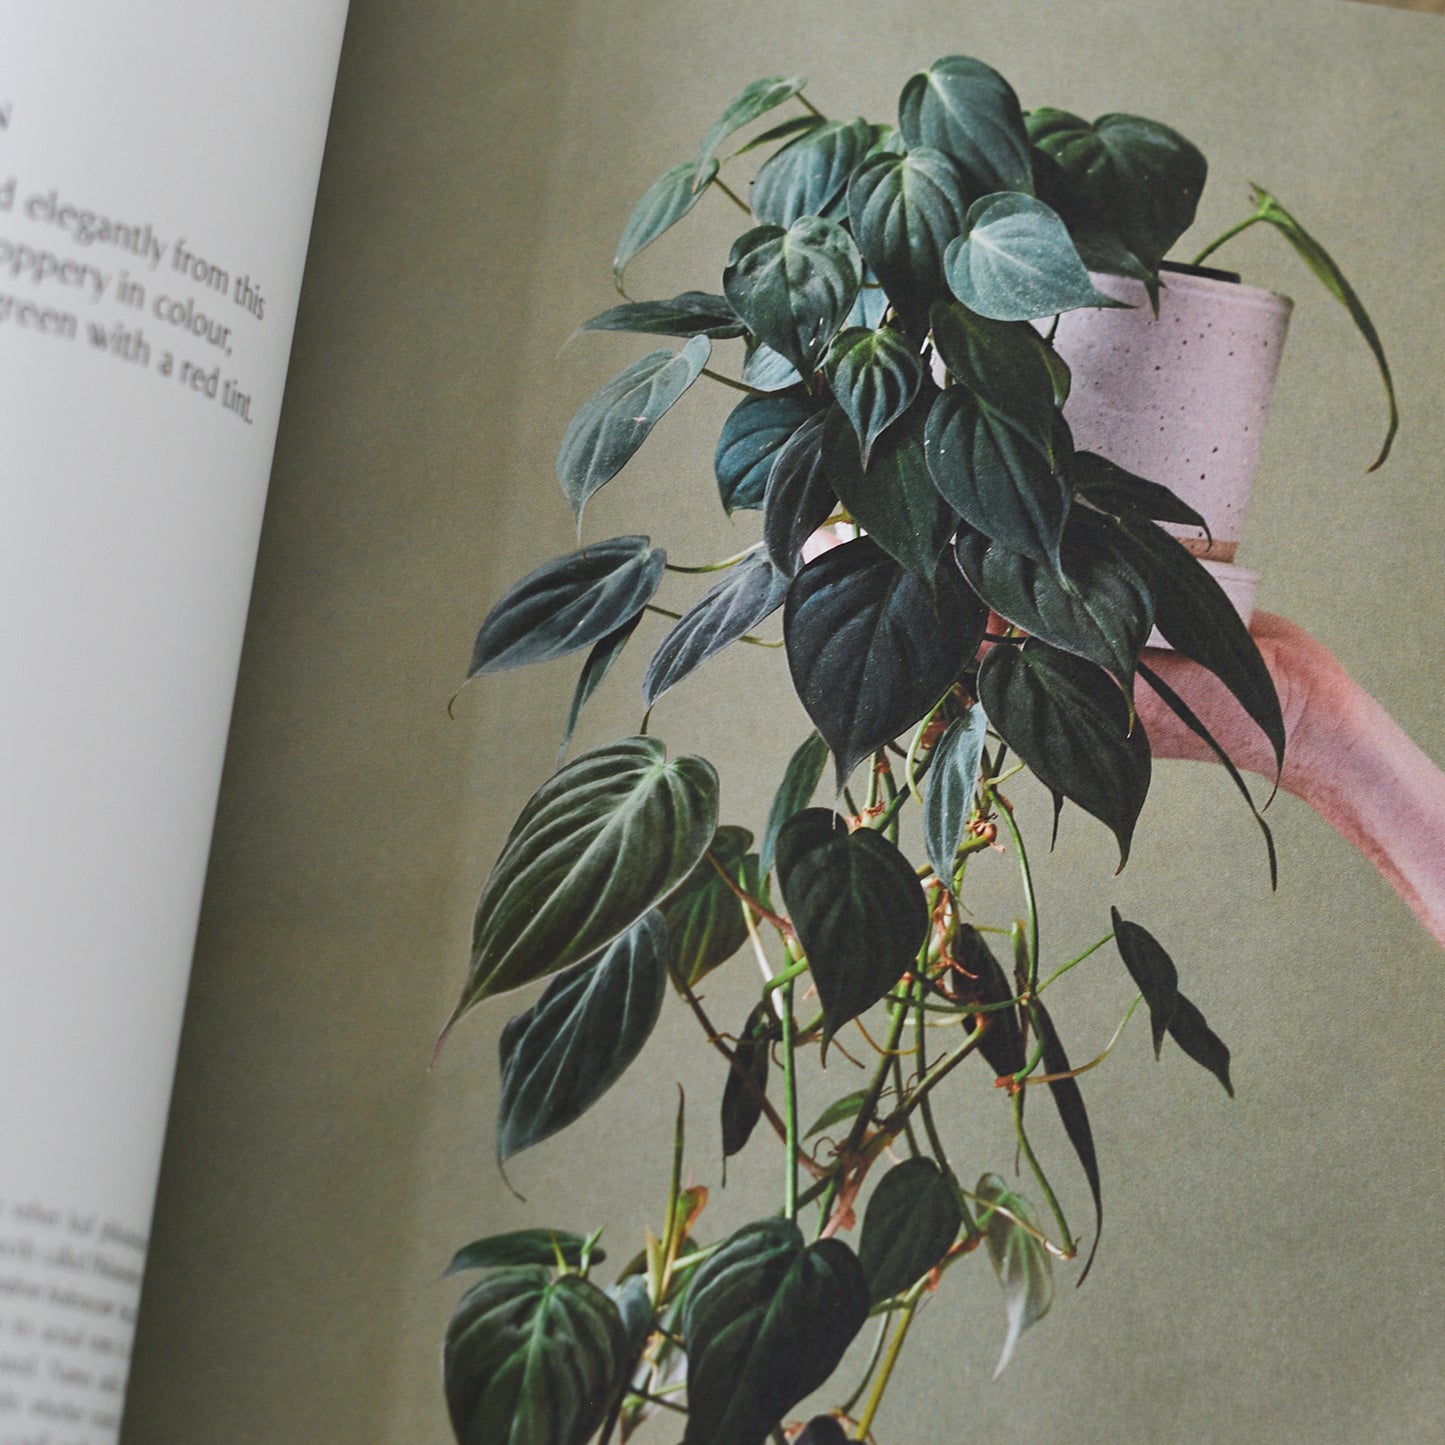 Plantopedia: The Definitive Guide to Houseplants